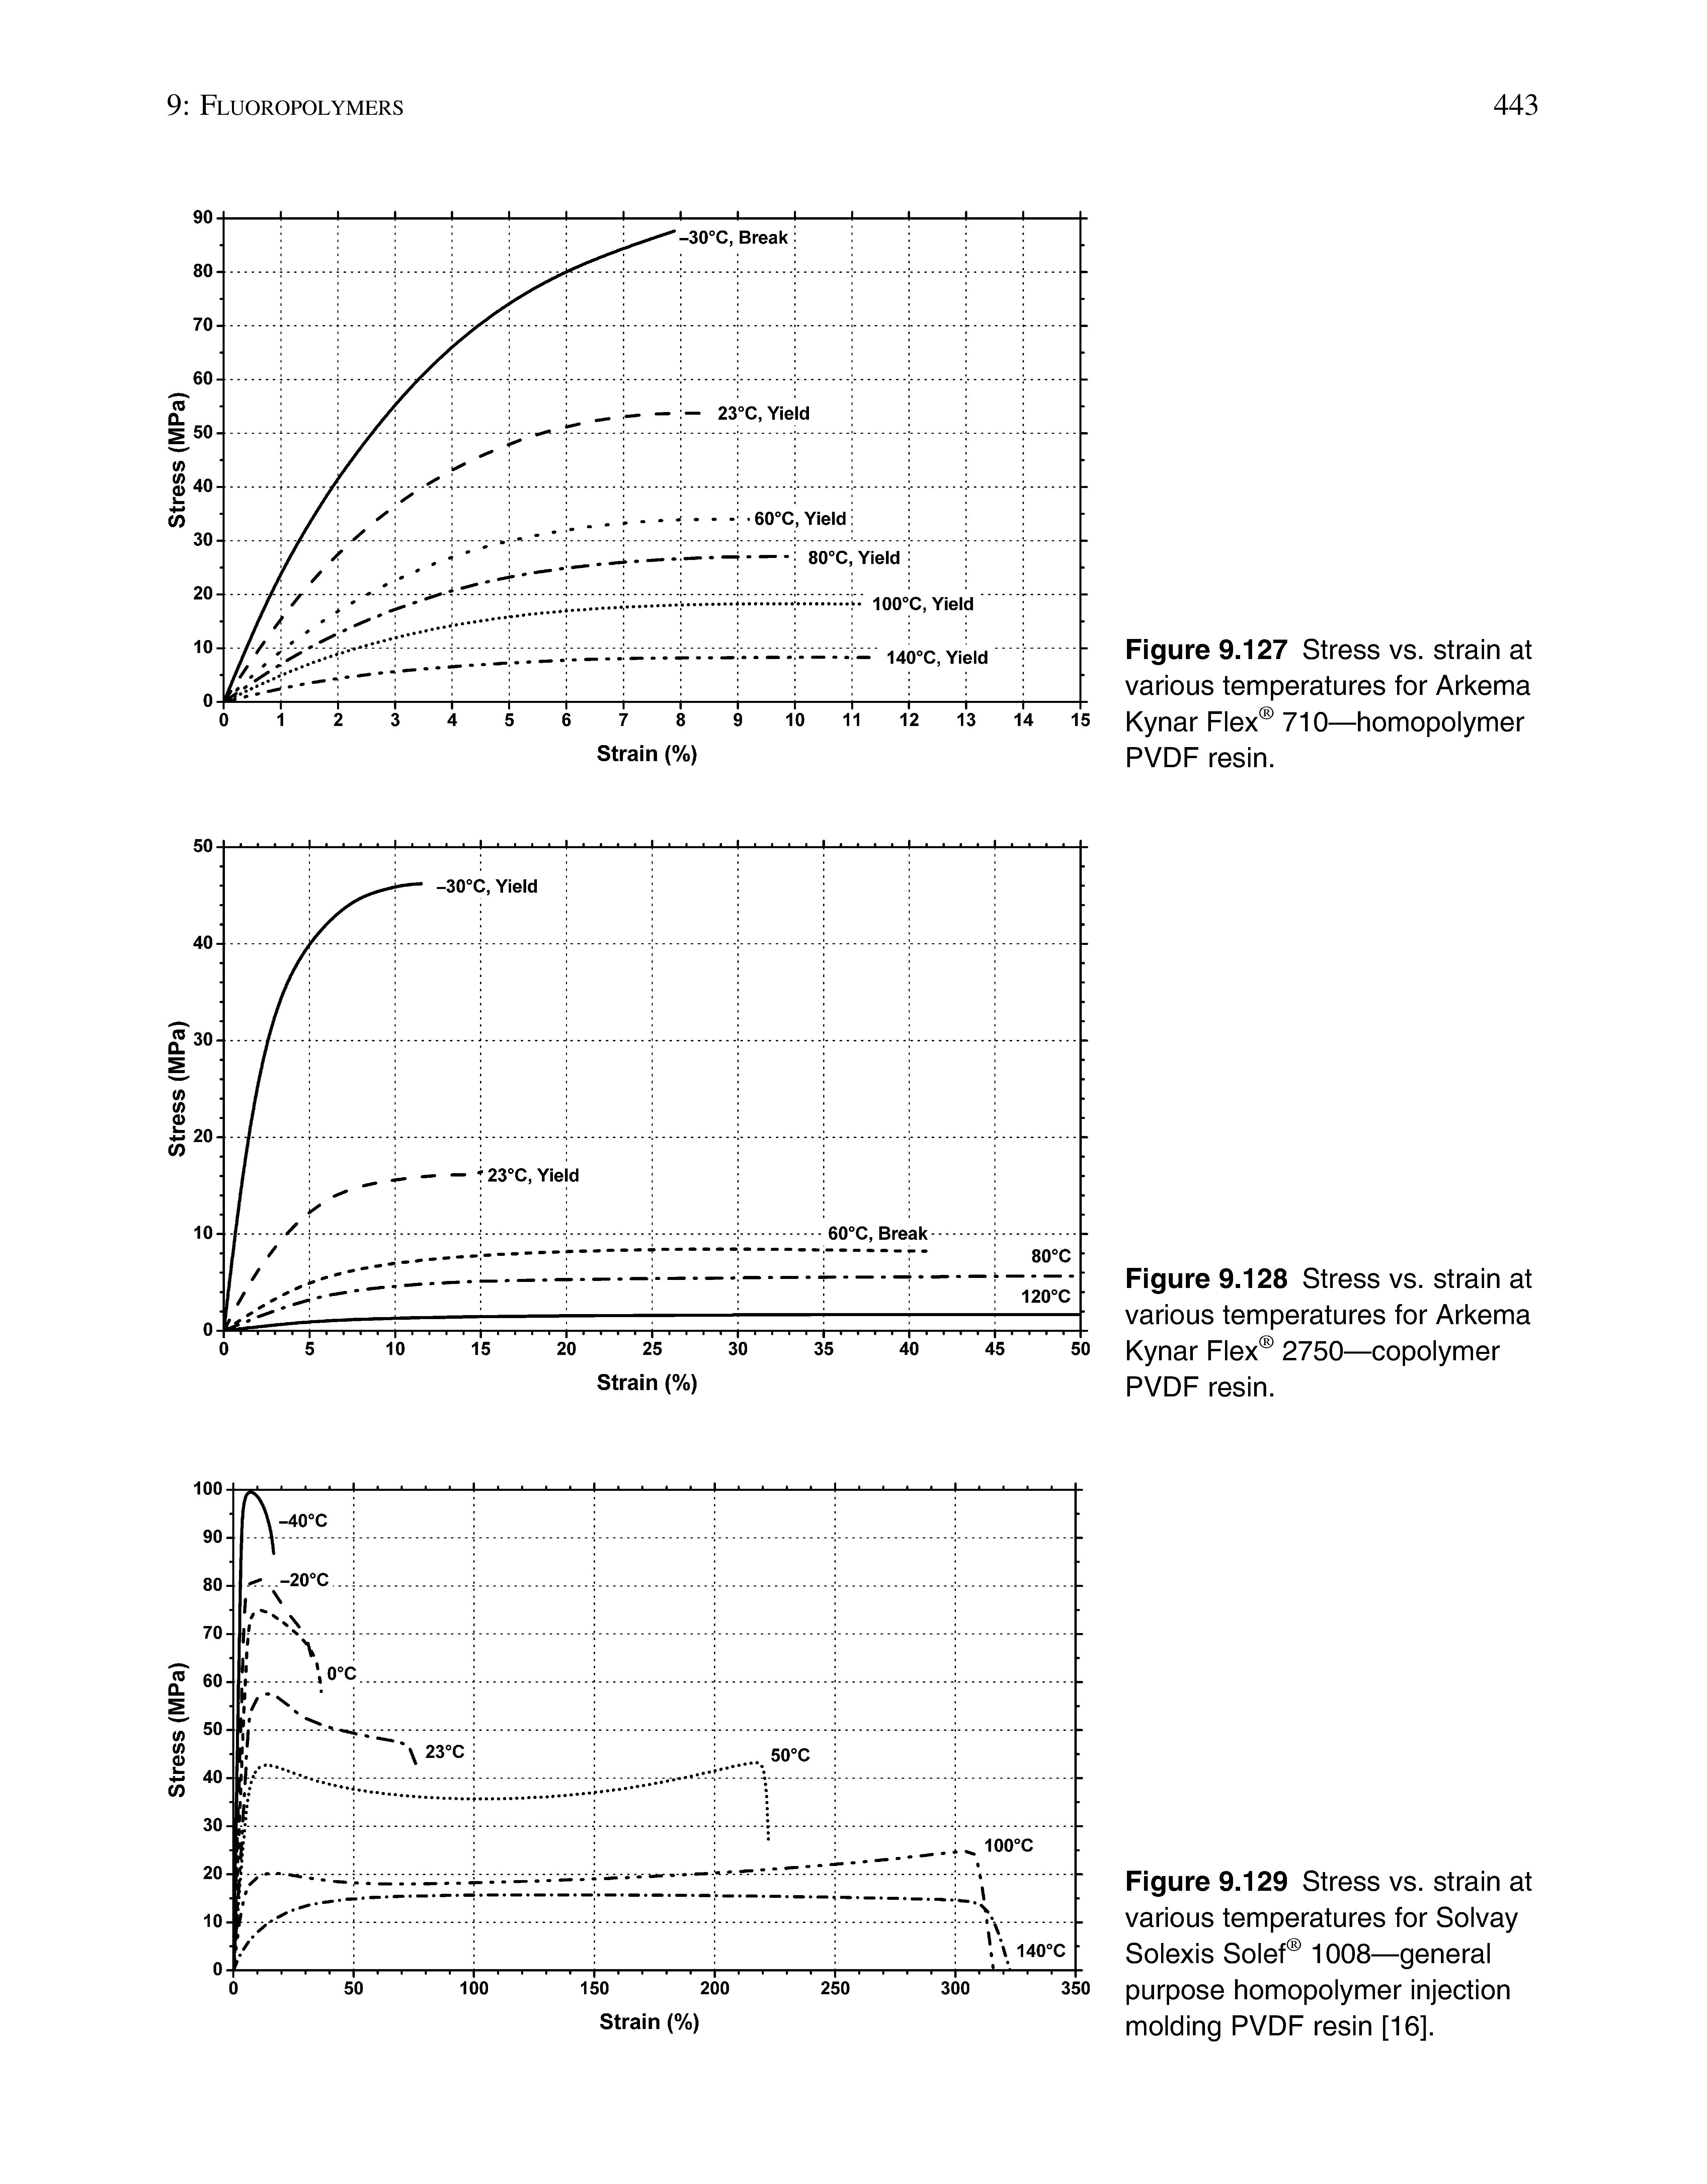 Figure 9.127 Stress vs. strain at various temperatures for Arkema Kynar Flex 710—homopolymer PVDF resin.